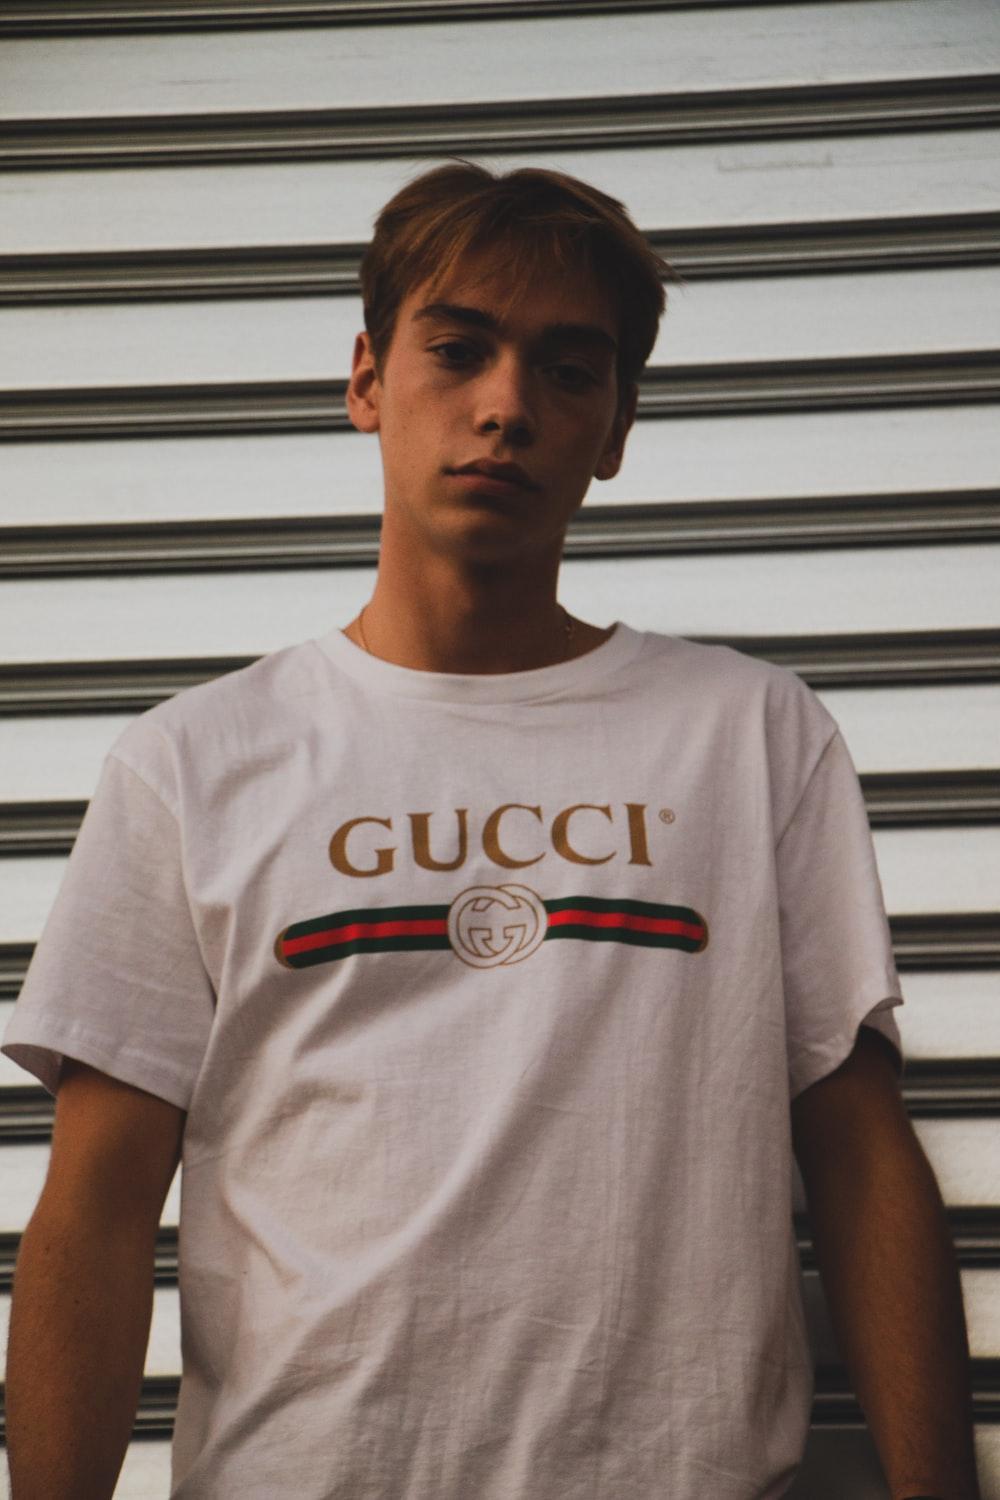 man wearing white Gucci shirt photo